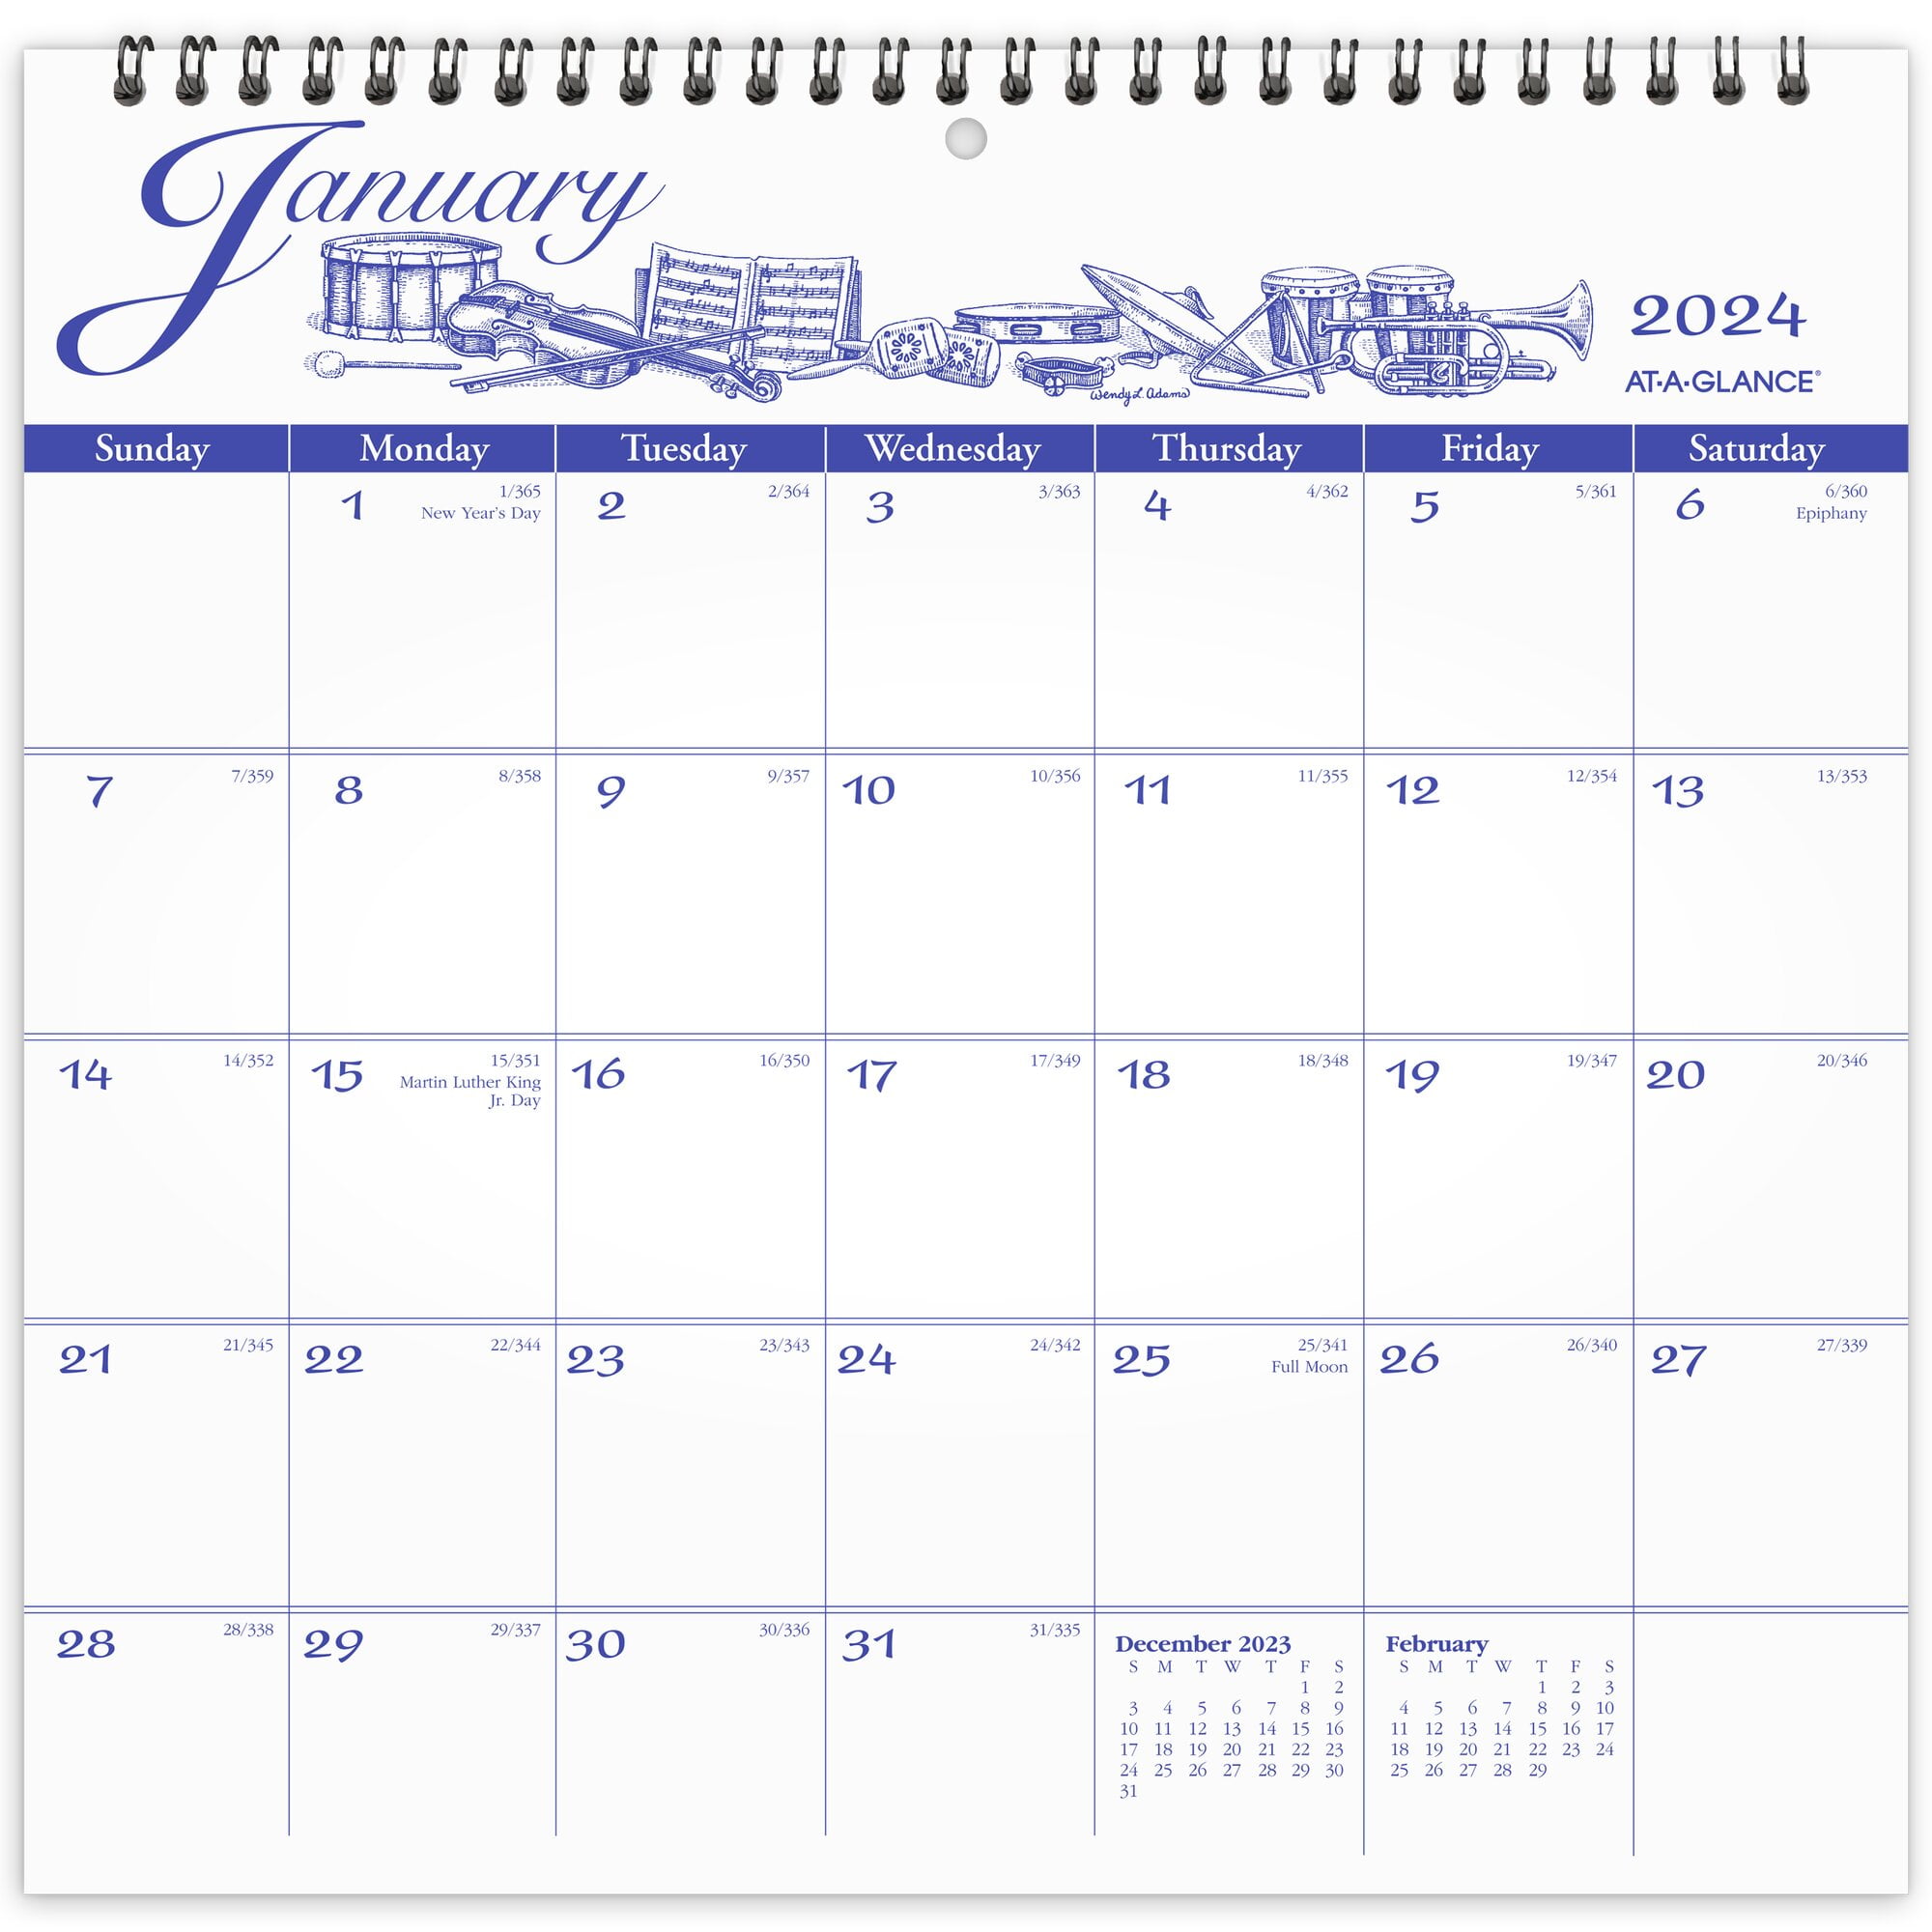 ATAGLANCE 2024 Illustrators Edition Monthly Wall Calendar Medium 12 x